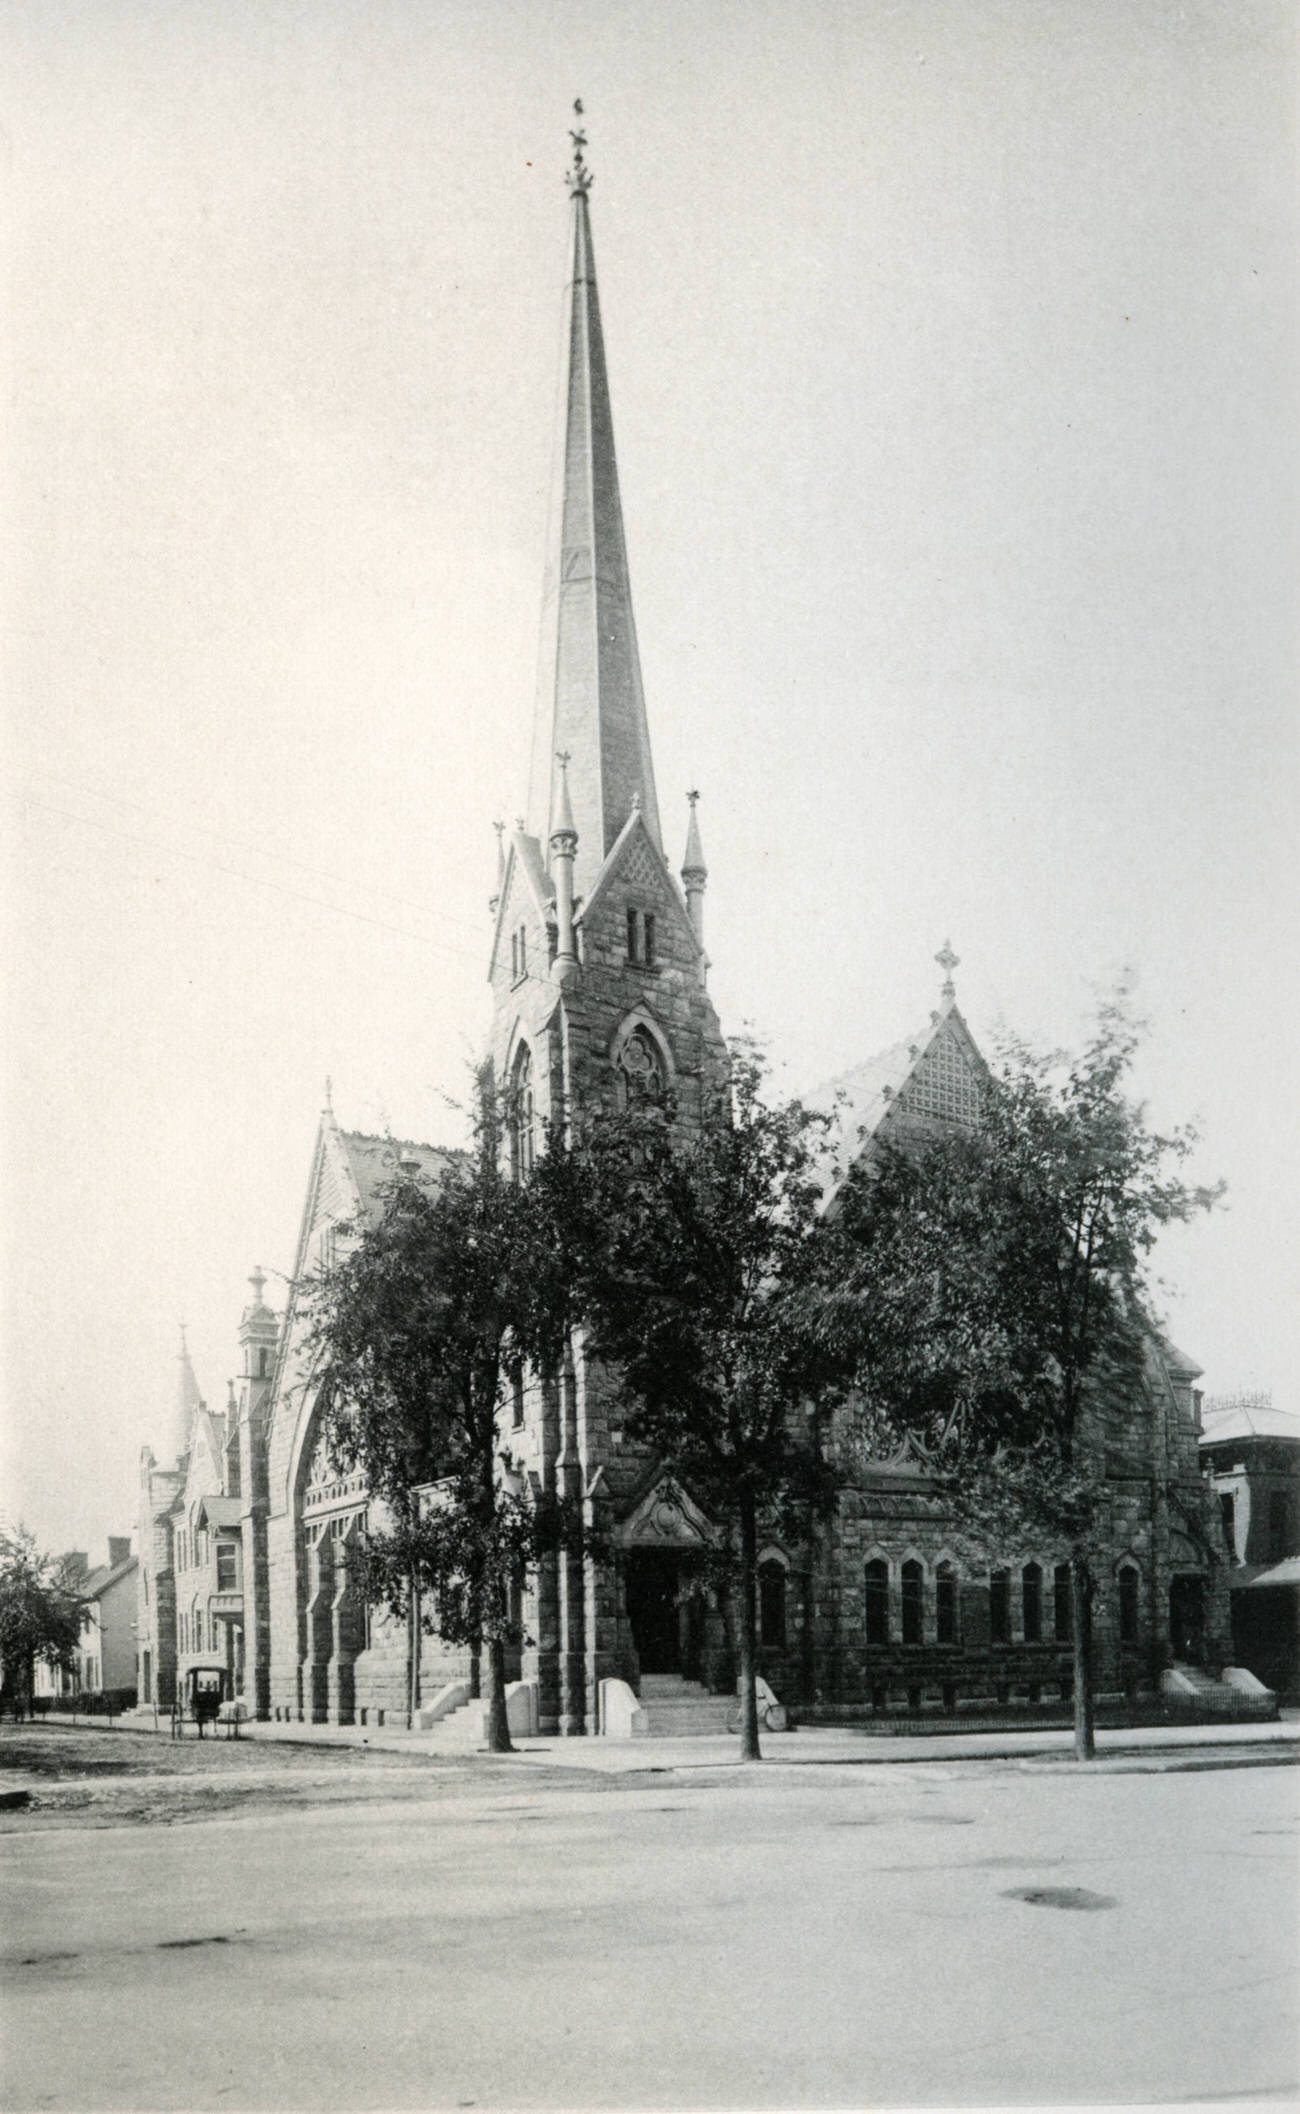 Broad Street Methodist Episcopal Church, photograph from 1897.